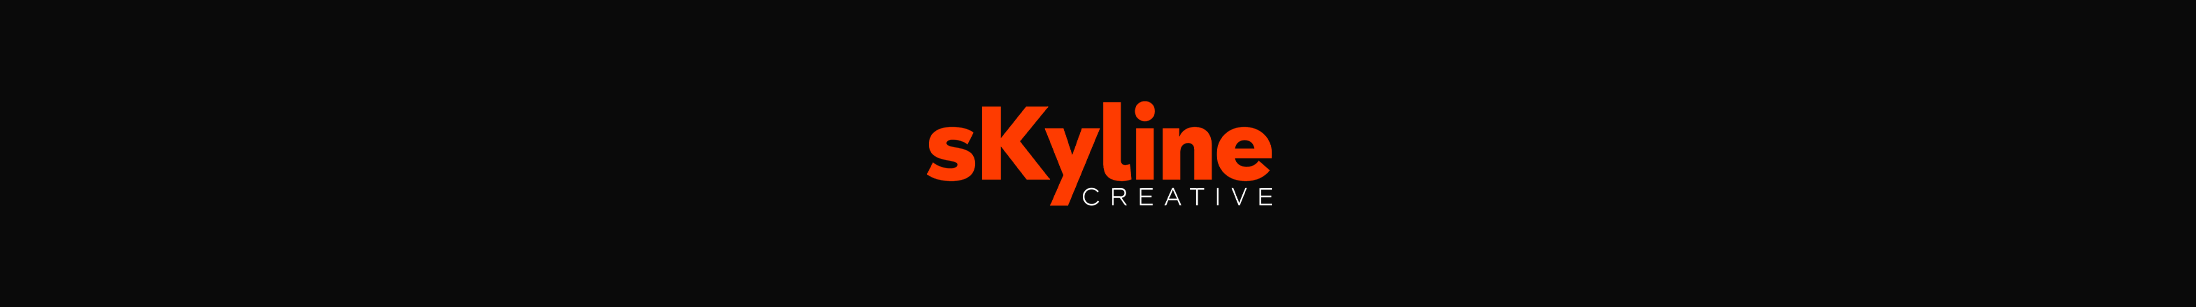 sKyline creative's profile banner